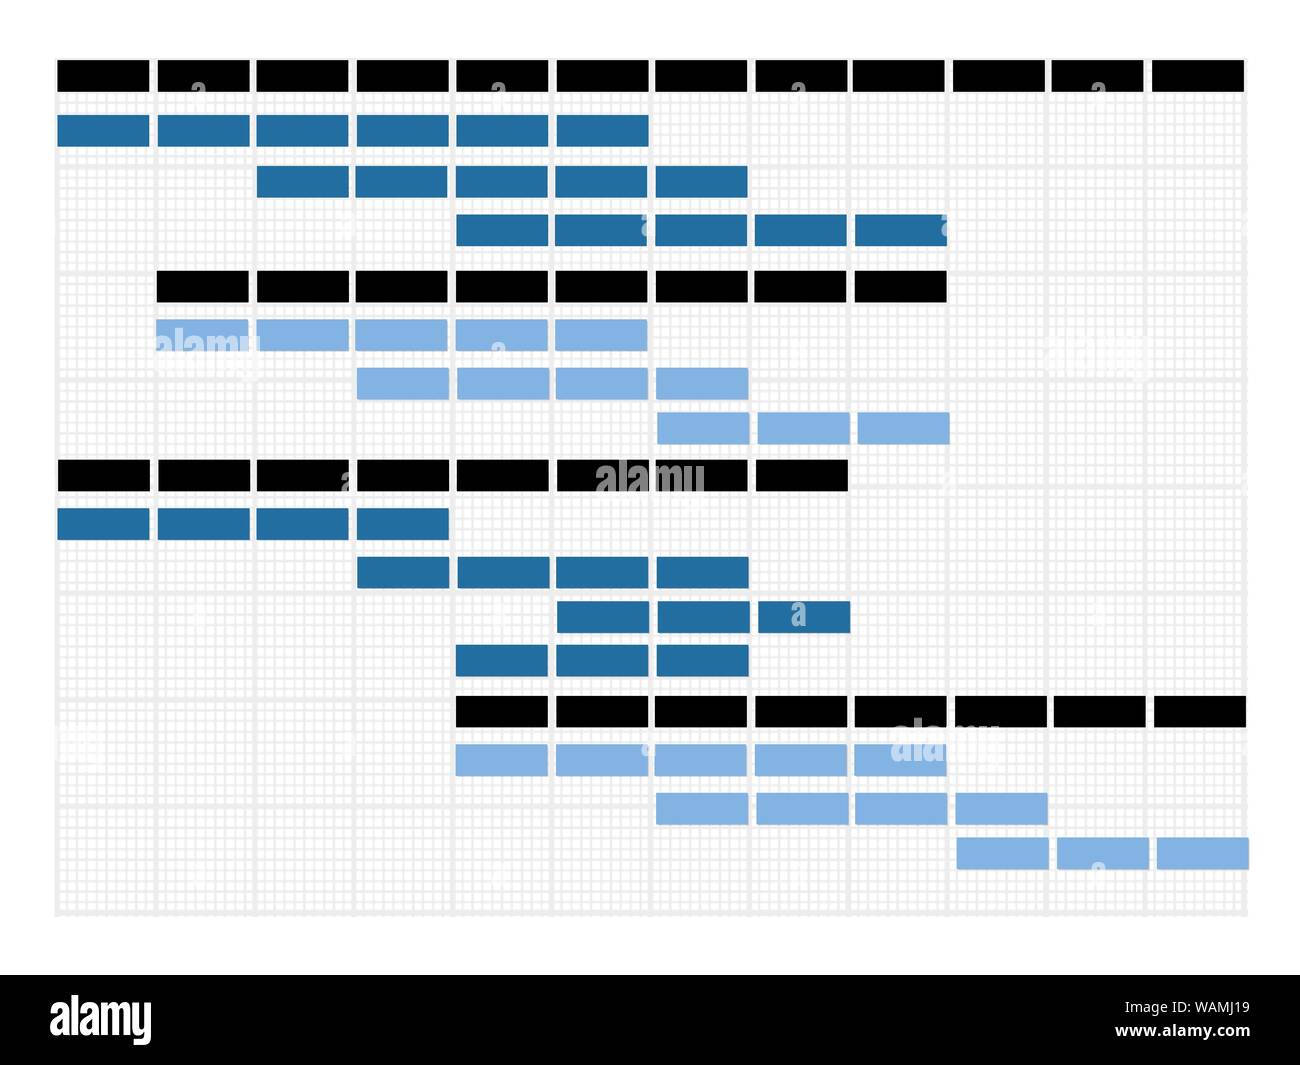 Project Schedule Bar Chart